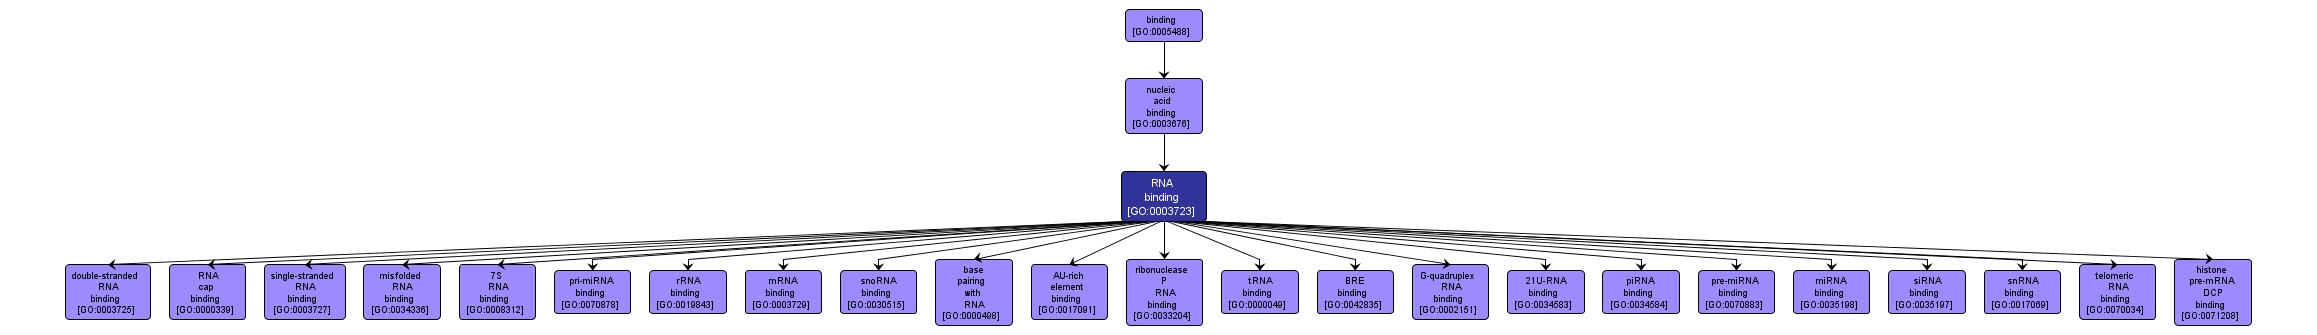 GO:0003723 - RNA binding (interactive image map)